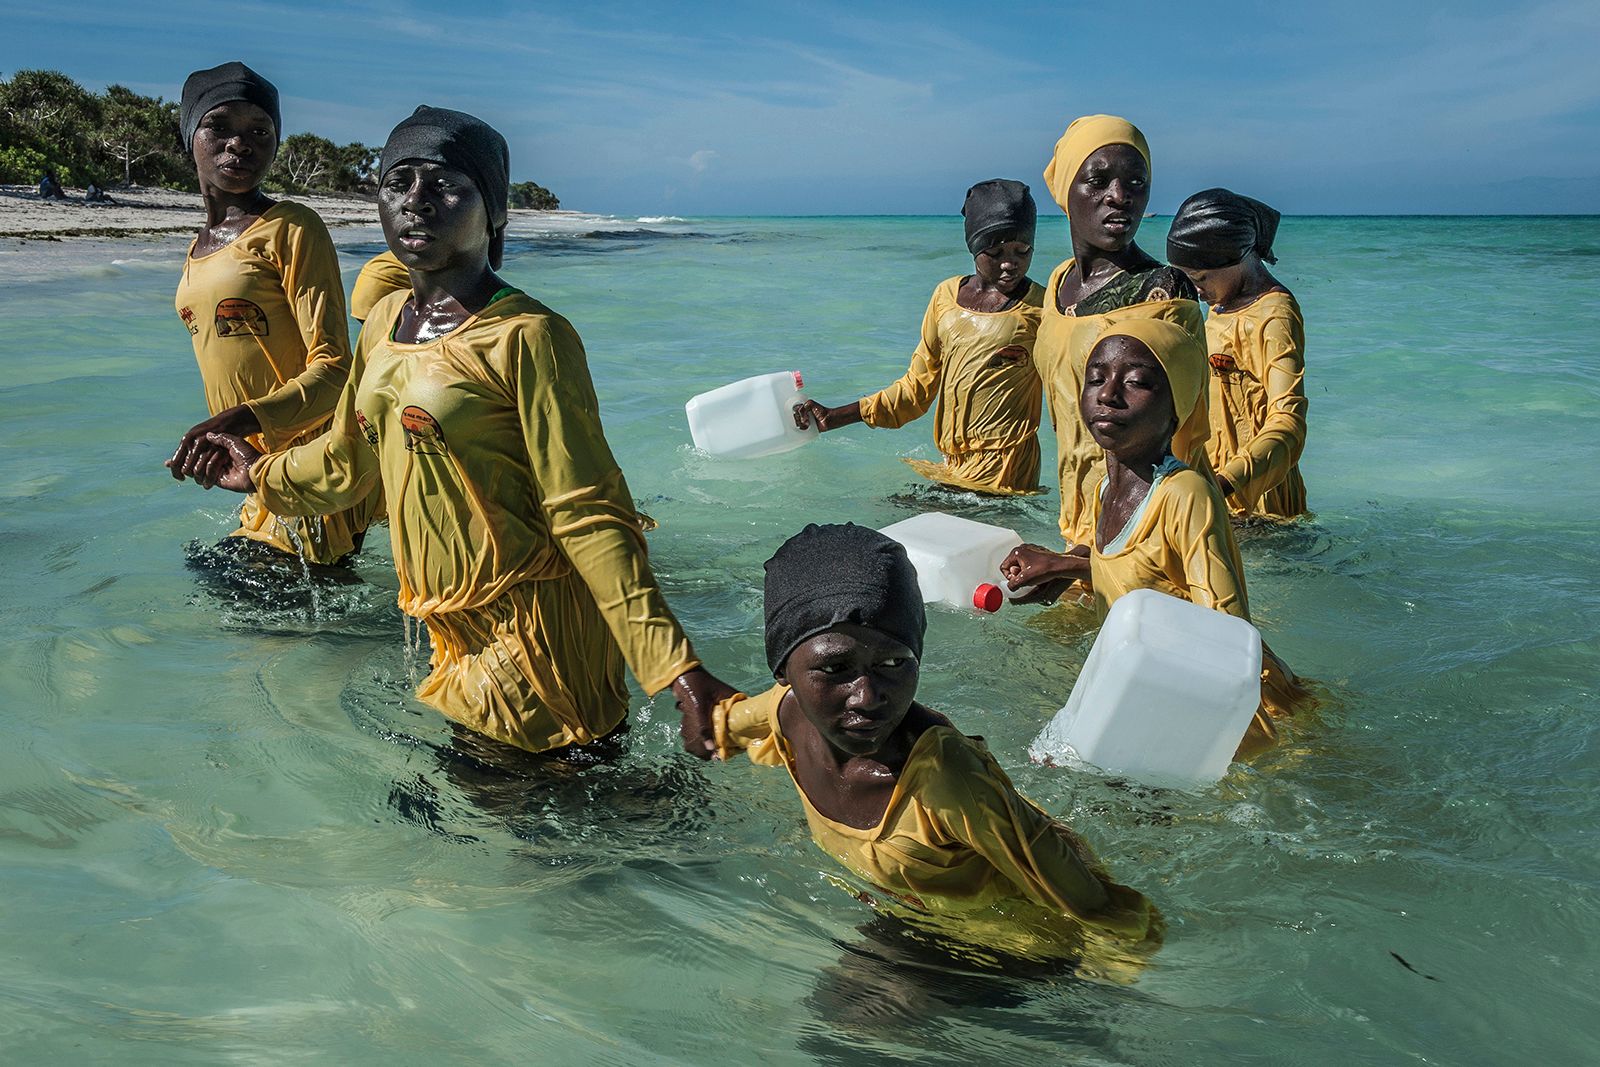 © Anna Boyiazis - Kijini Primary School students walk to shore after their lesson in the Indian Ocean off of Muyuni, Zanzibar.